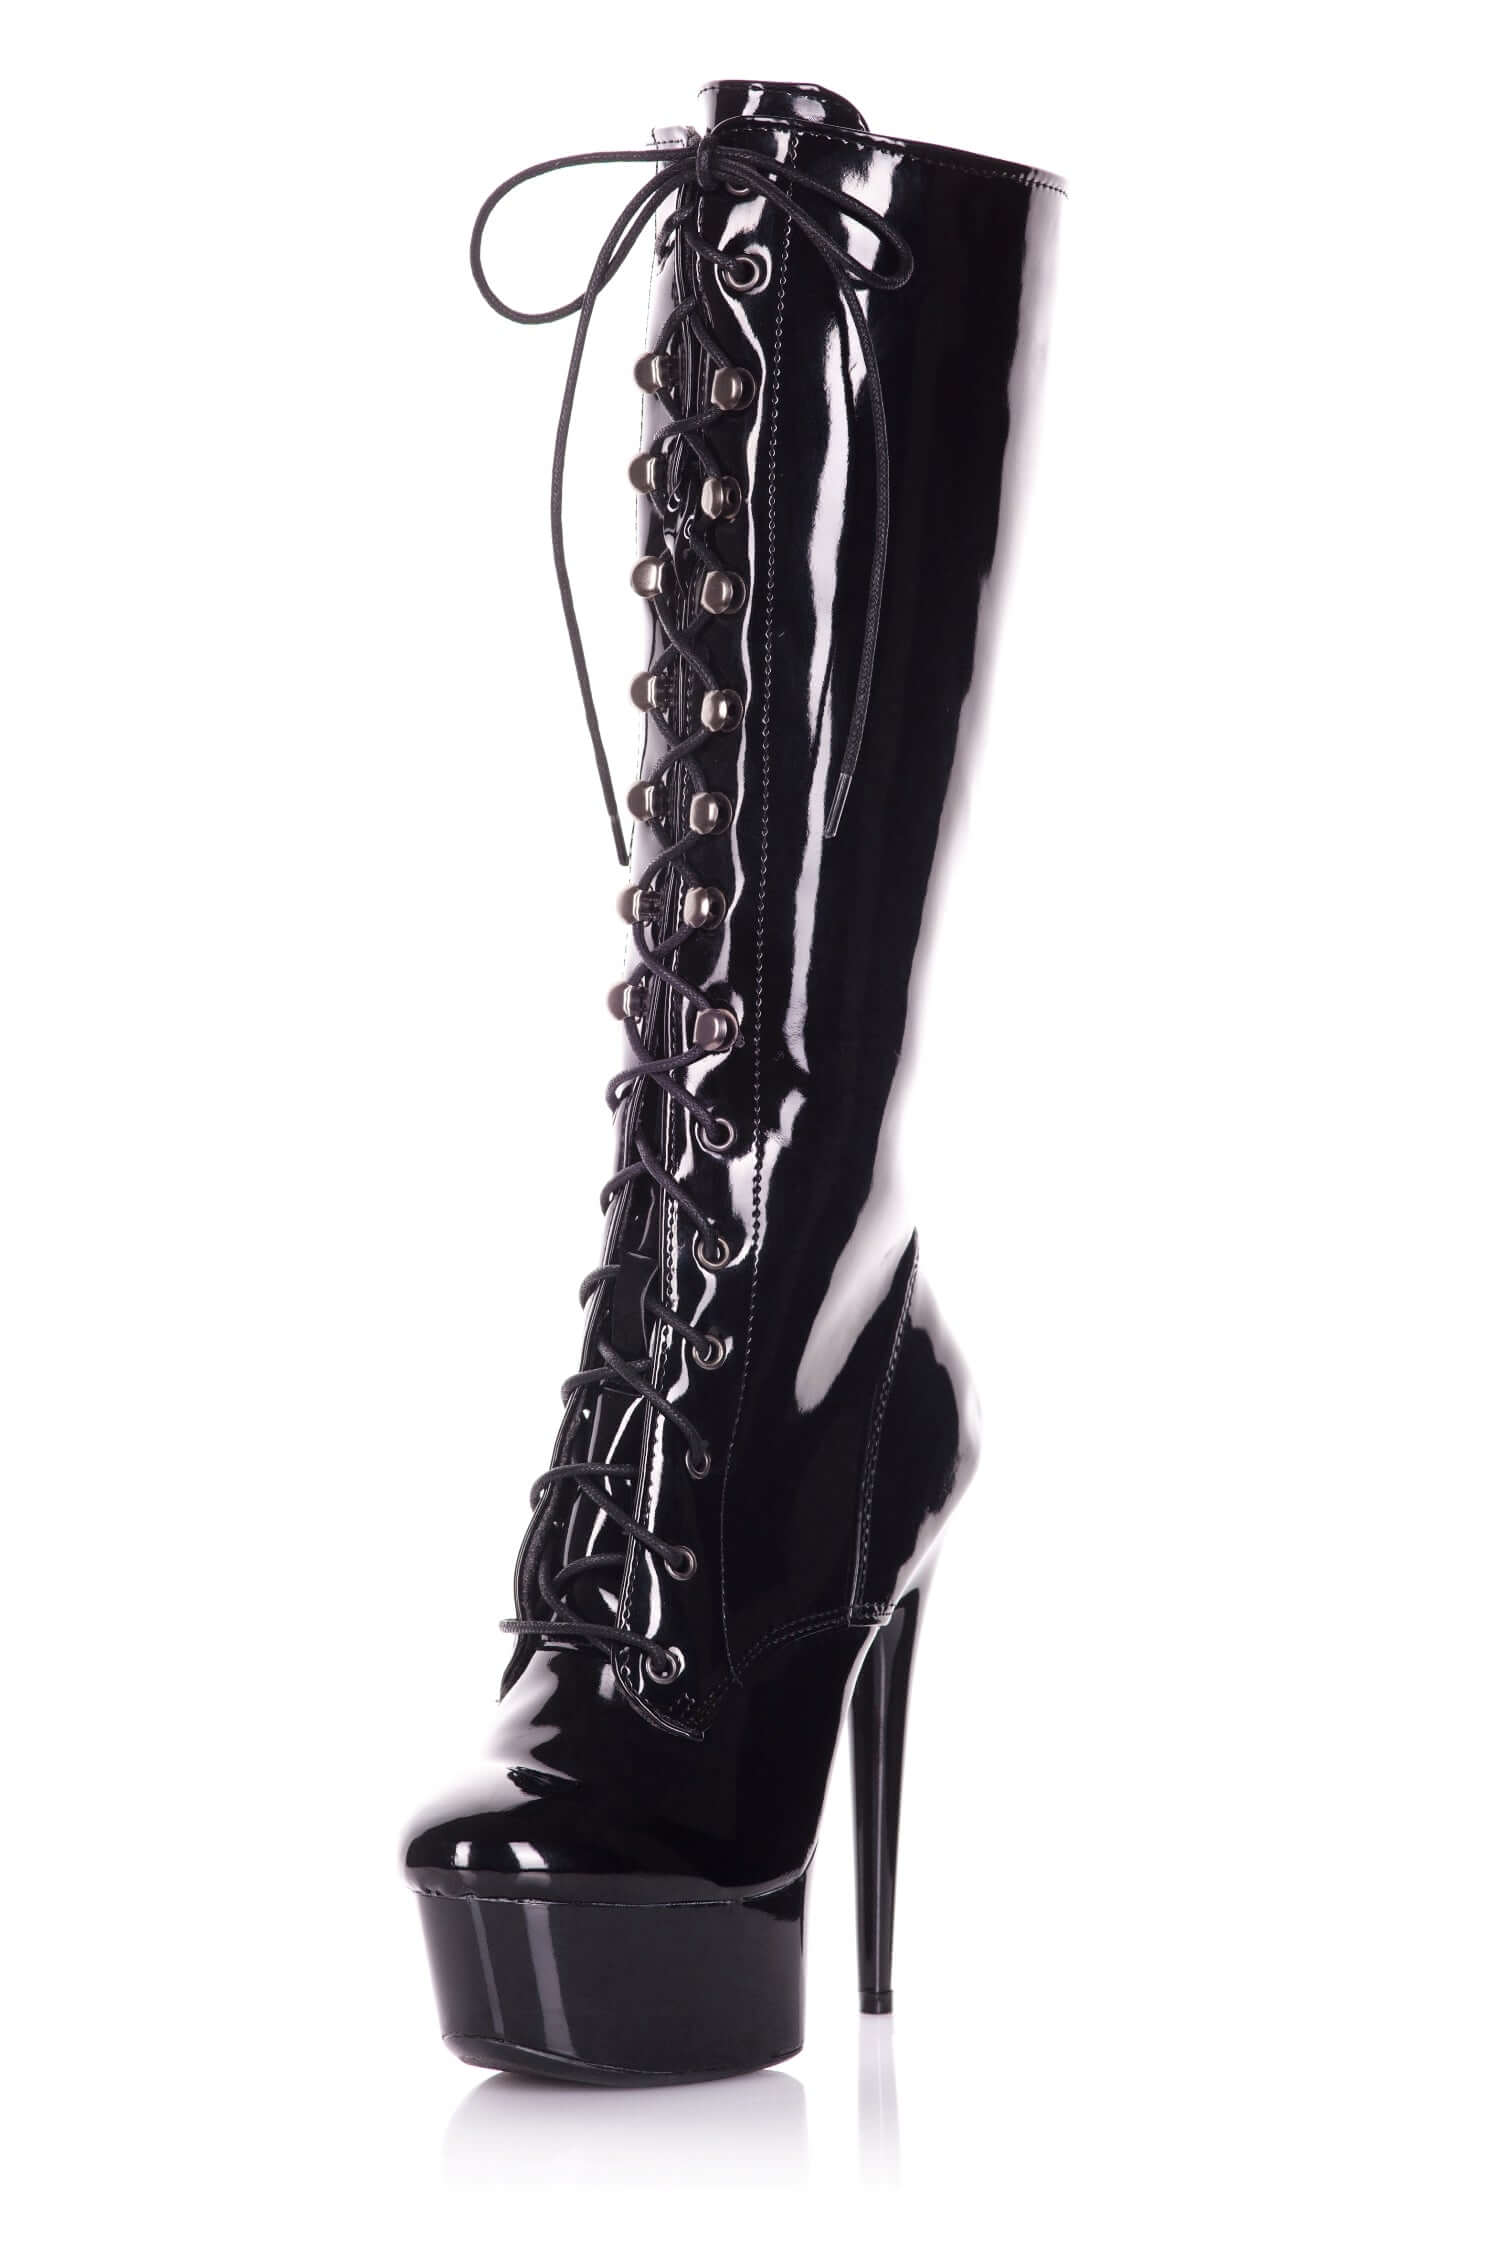 Kinnaird Dita Duchess Satin Black Corset & Patent Boots